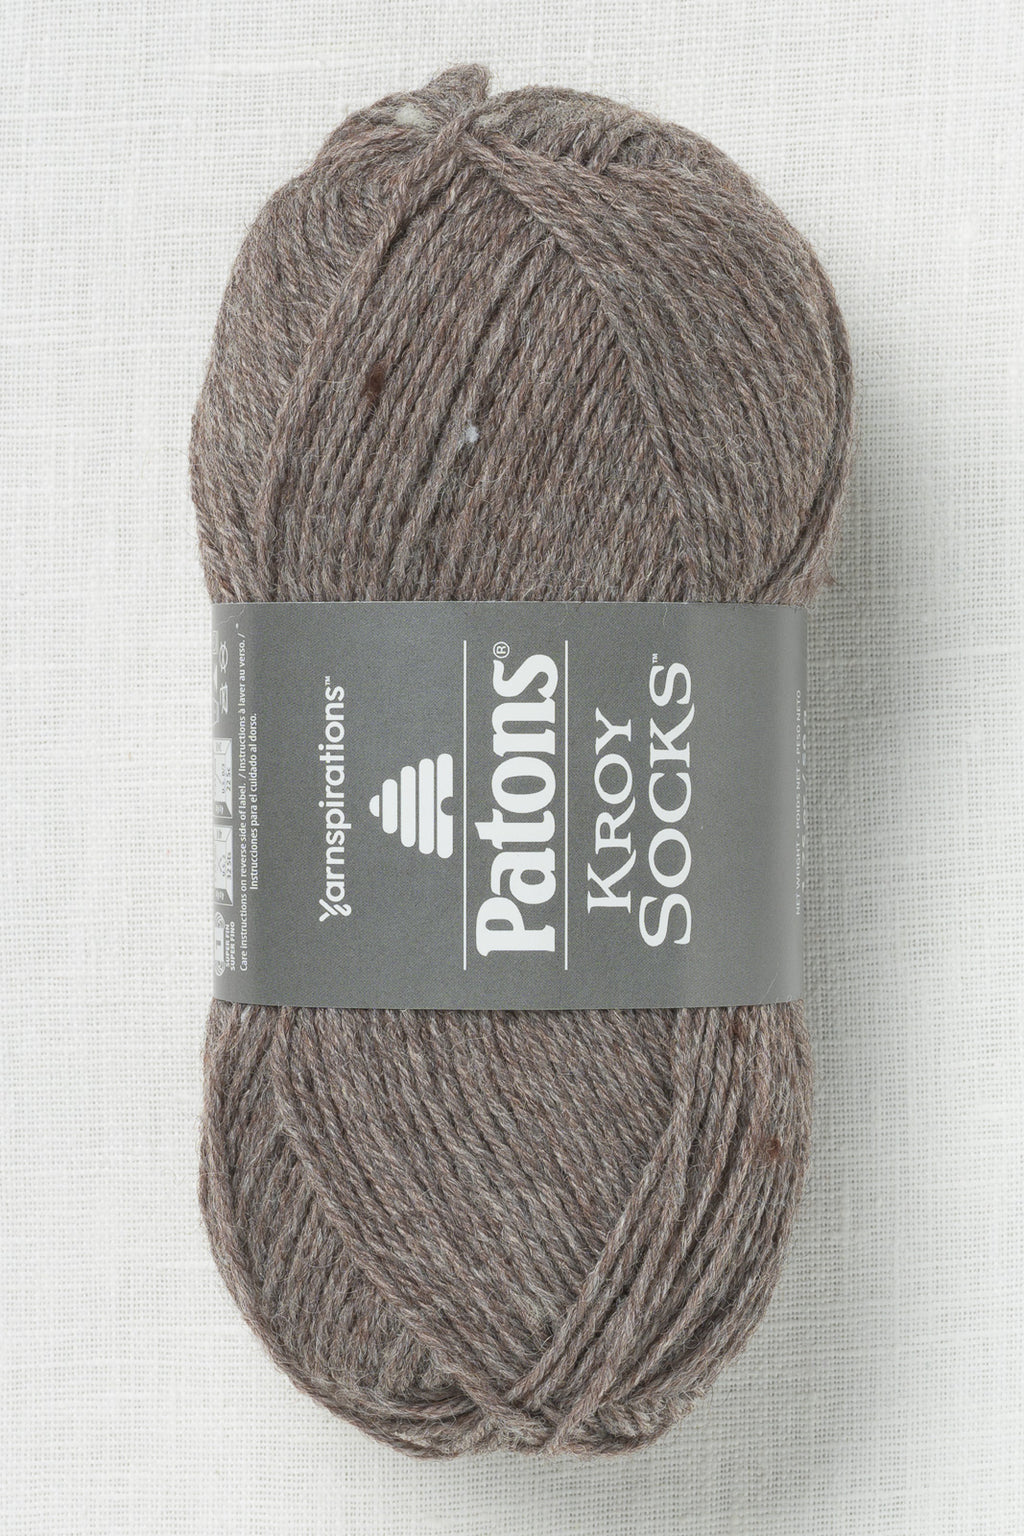 Patons Kroy Socks Flax